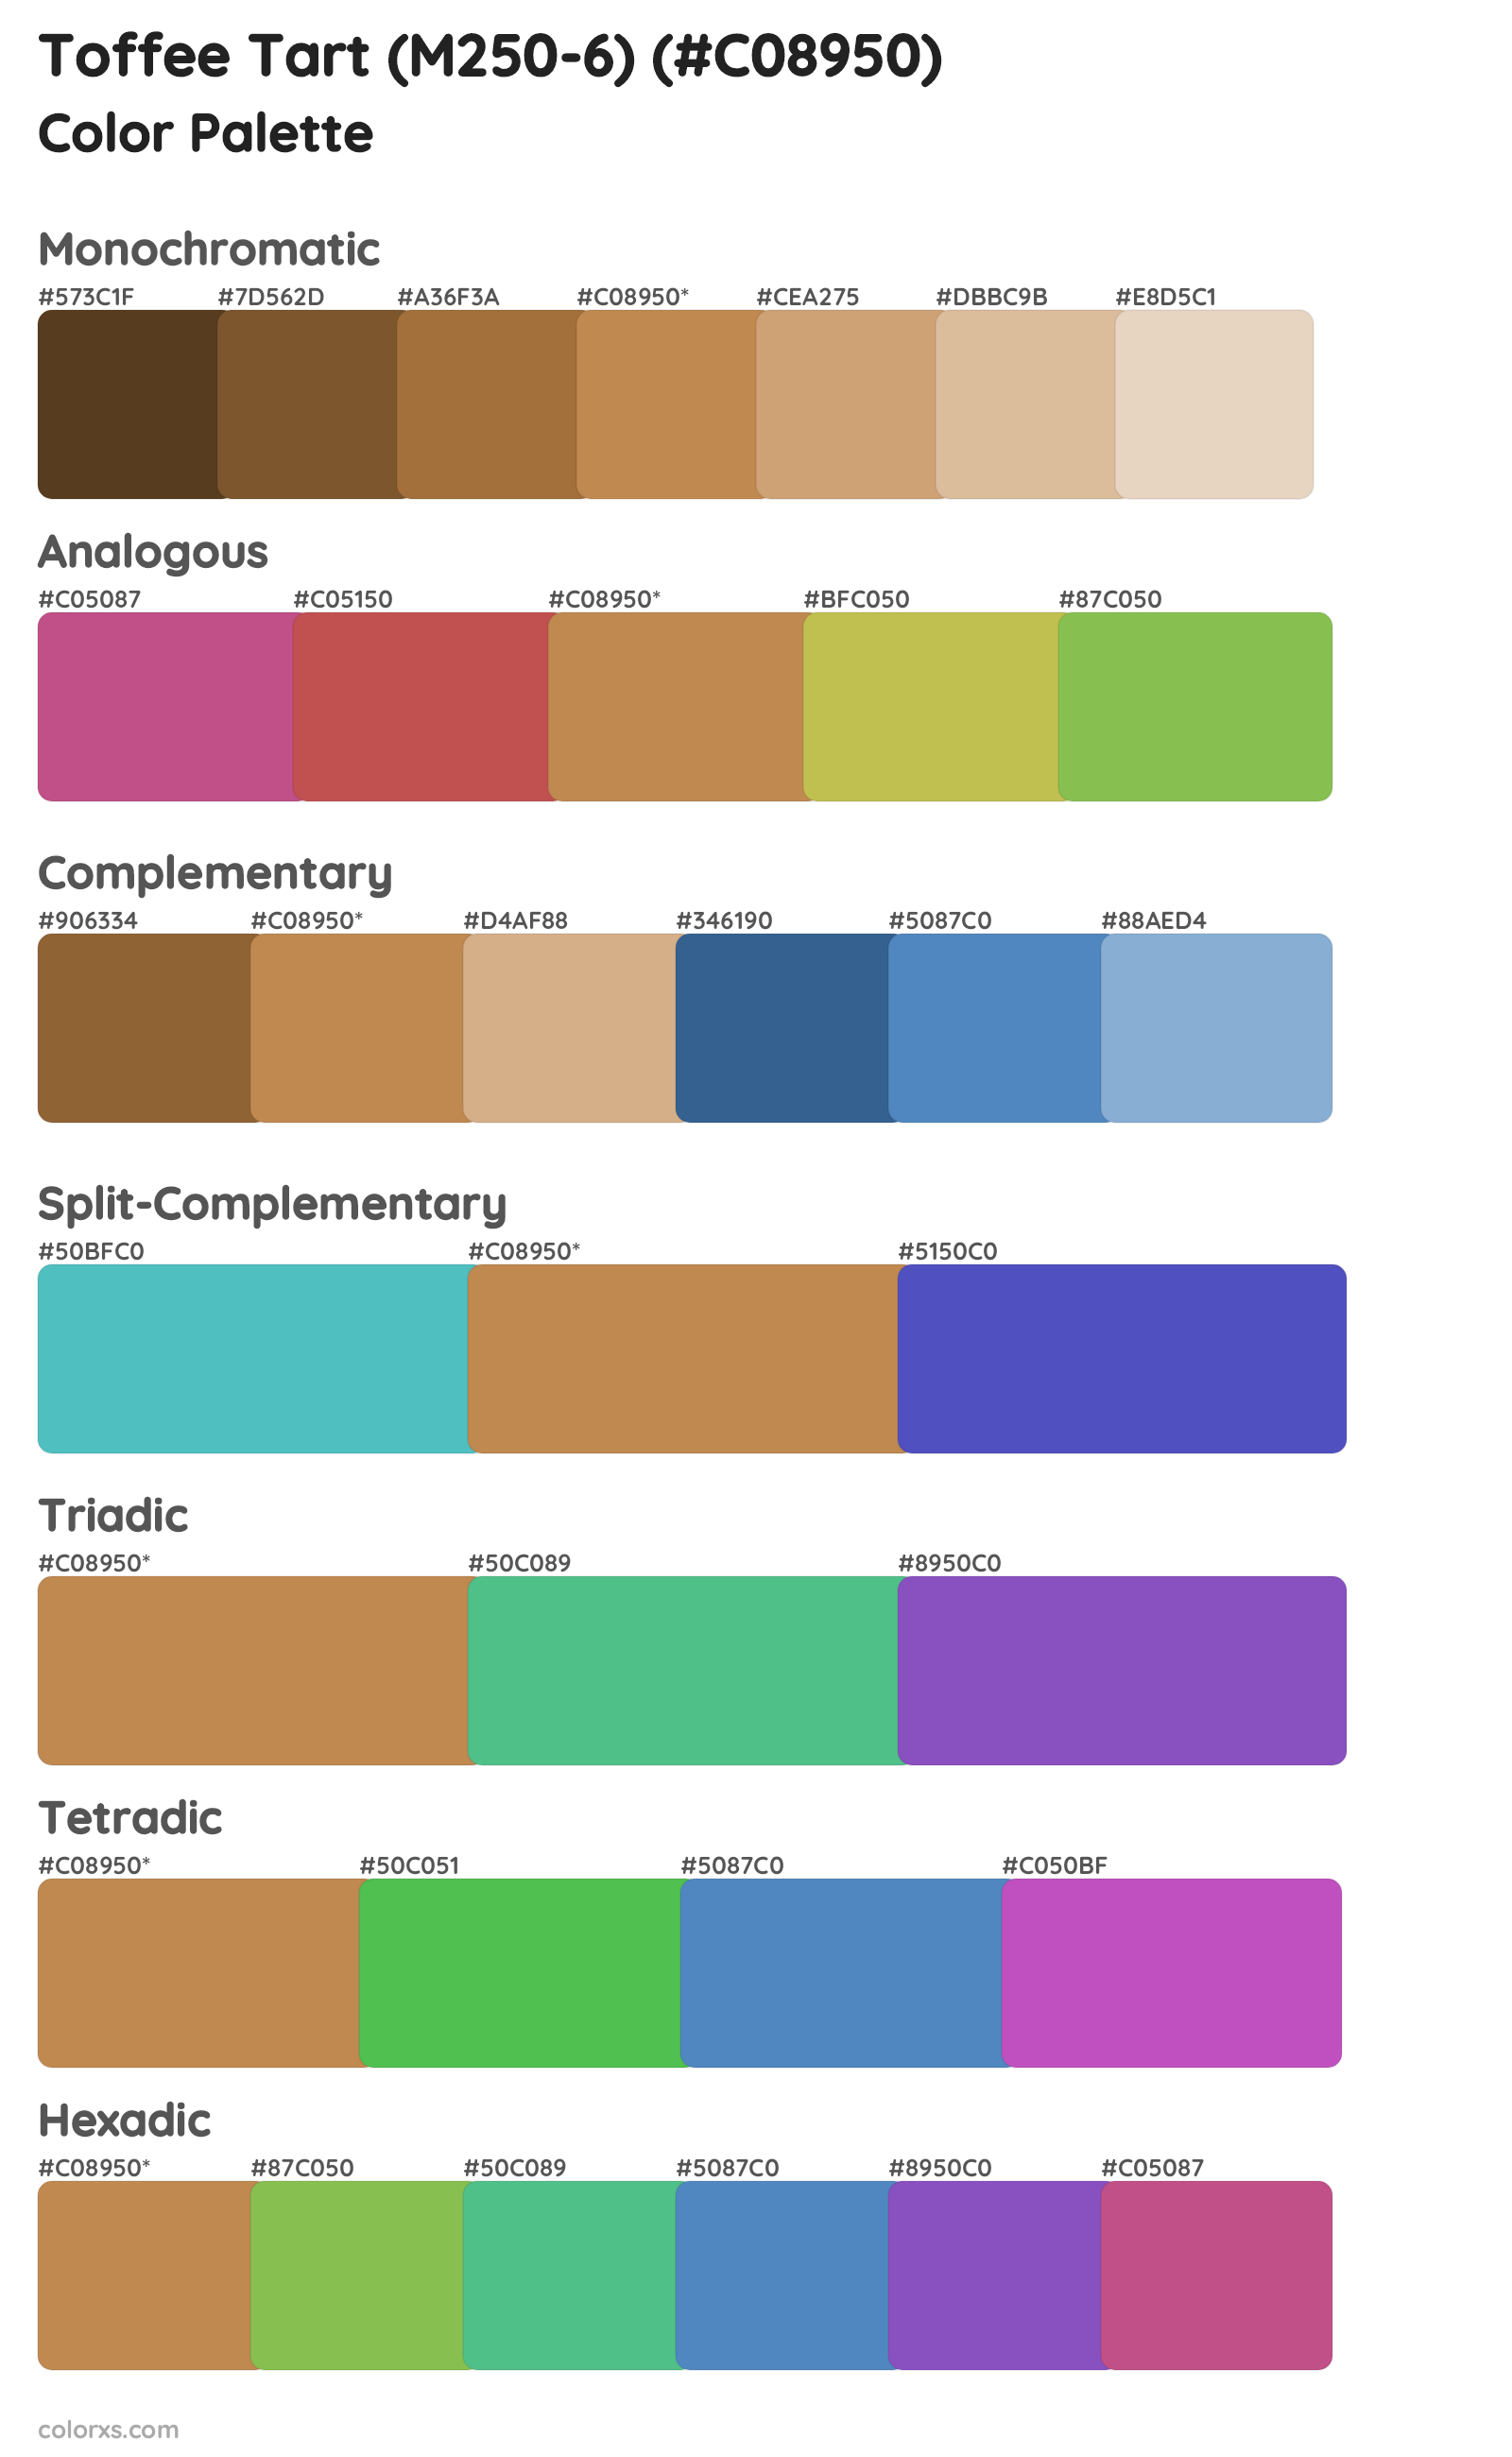 Toffee Tart (M250-6) Color Scheme Palettes